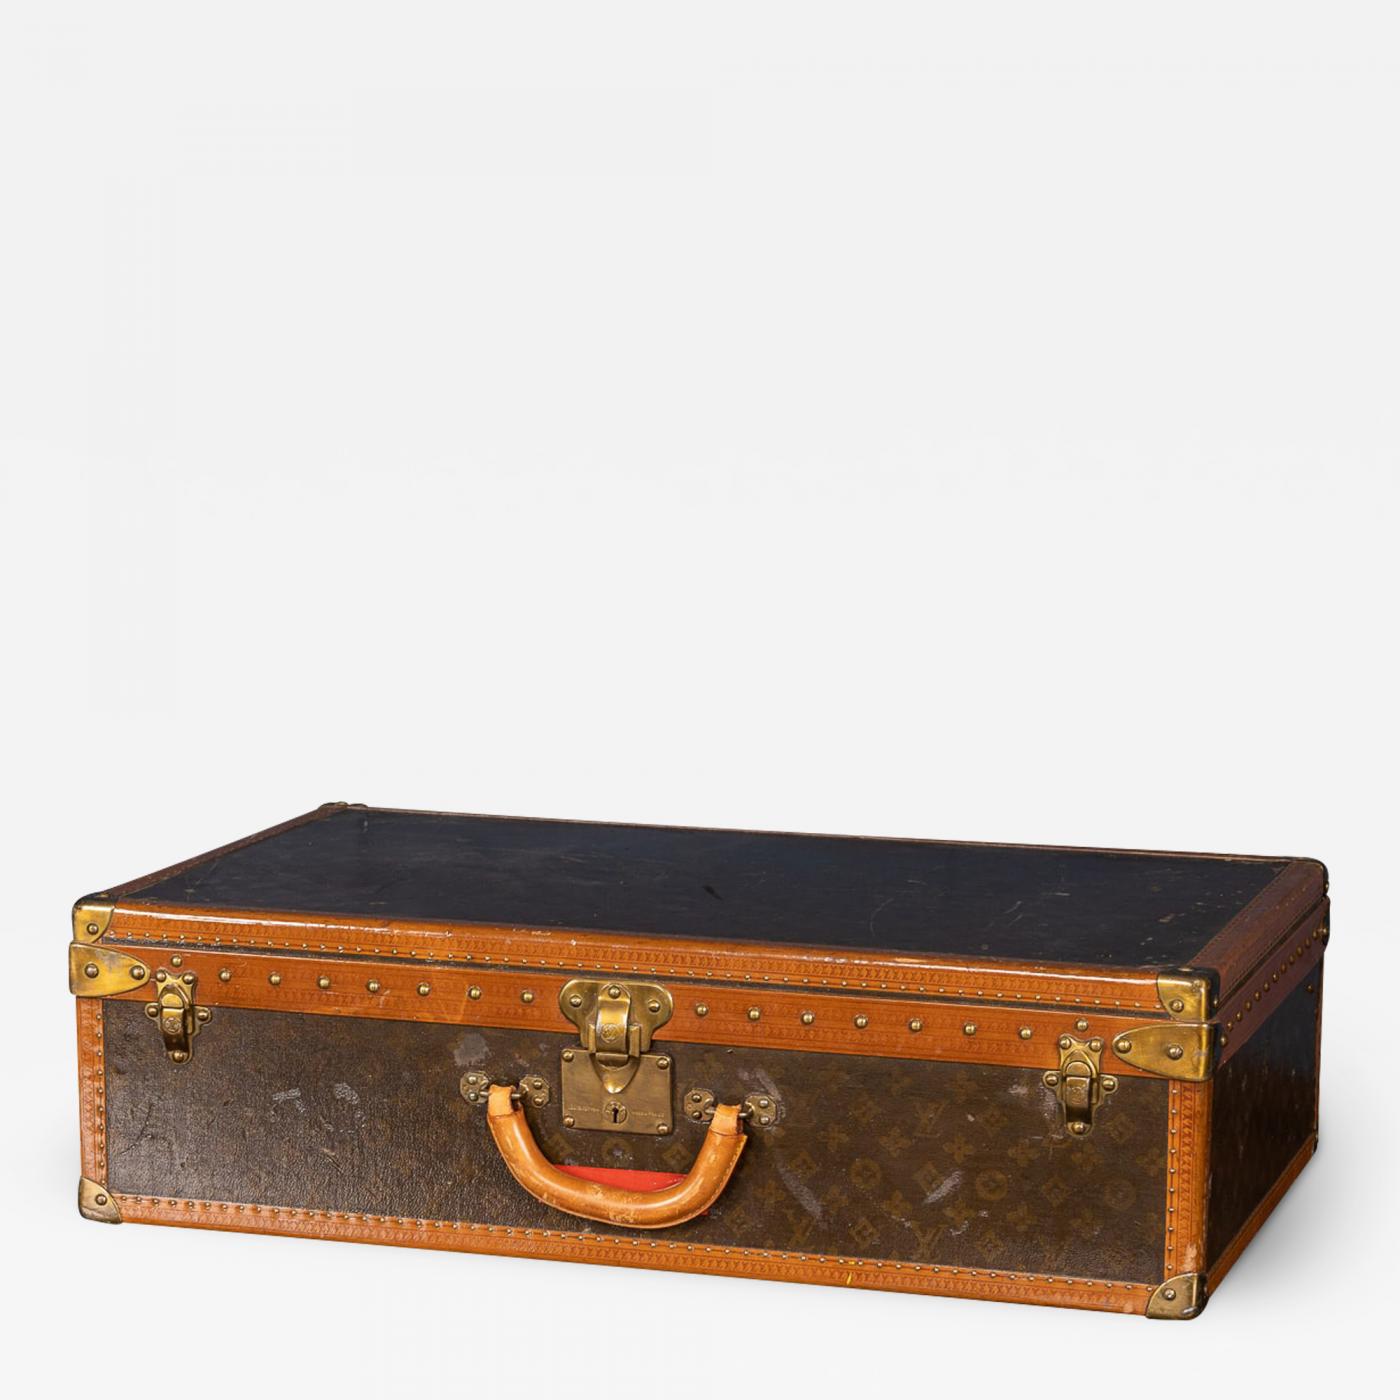 20th Century Louis Vuitton Suitcase In Monogram Canvas, France, c